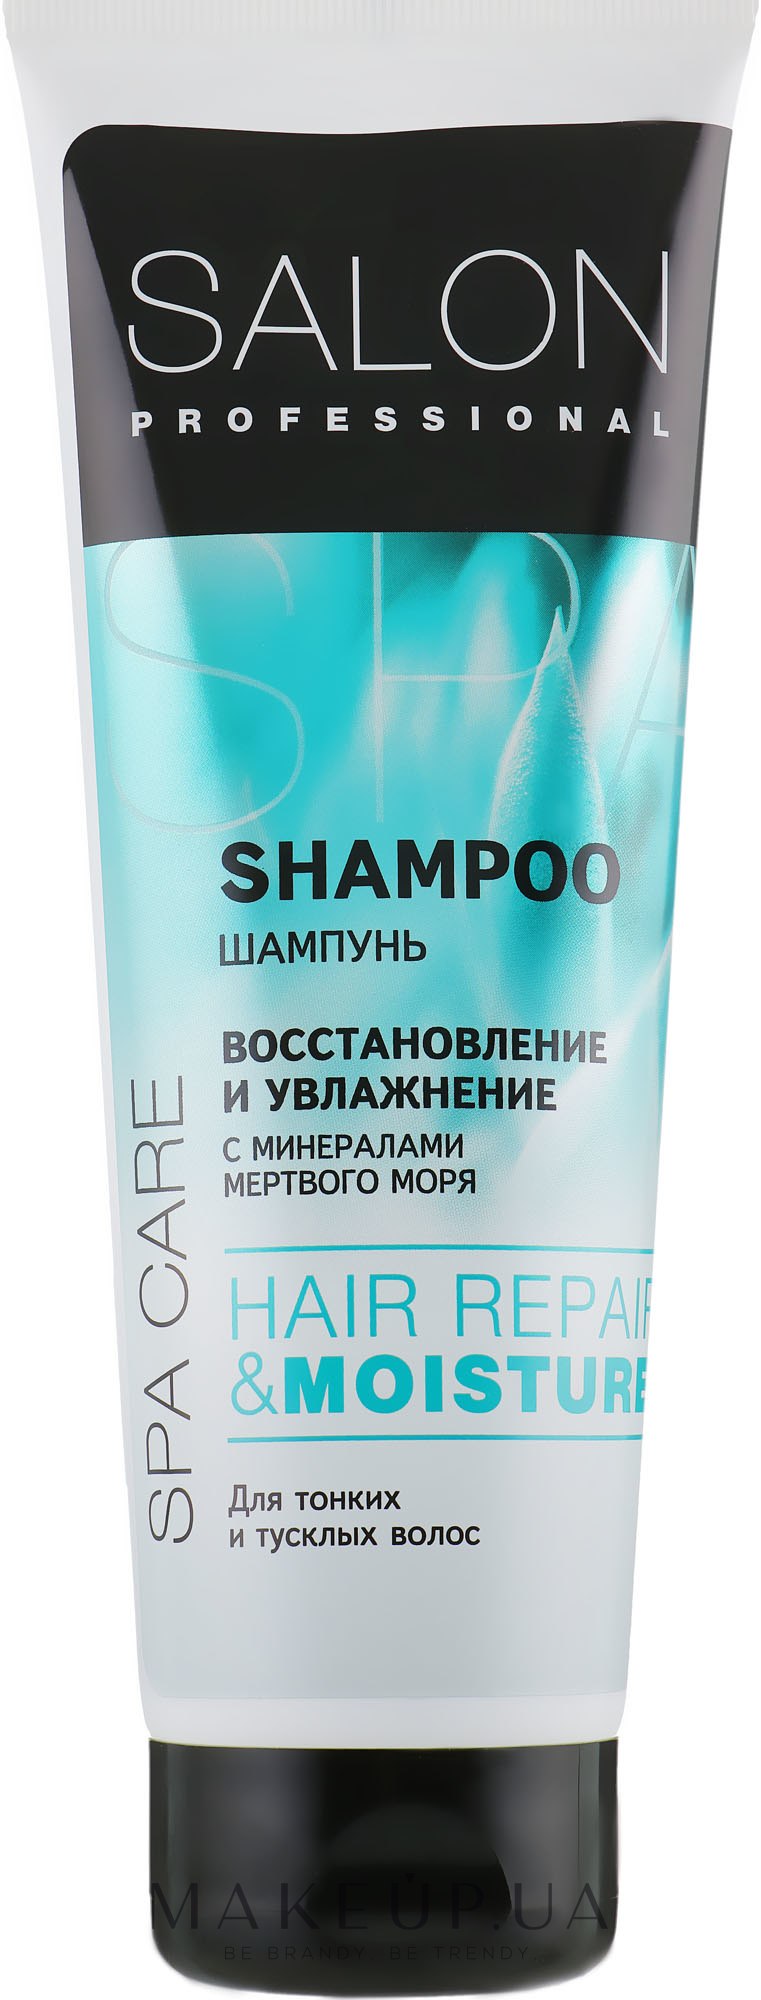 Шампунь для тонких и тусклых волос - Salon Professional Spa Care Moisture Hair Repair & Moisture Shampoo — фото 250ml